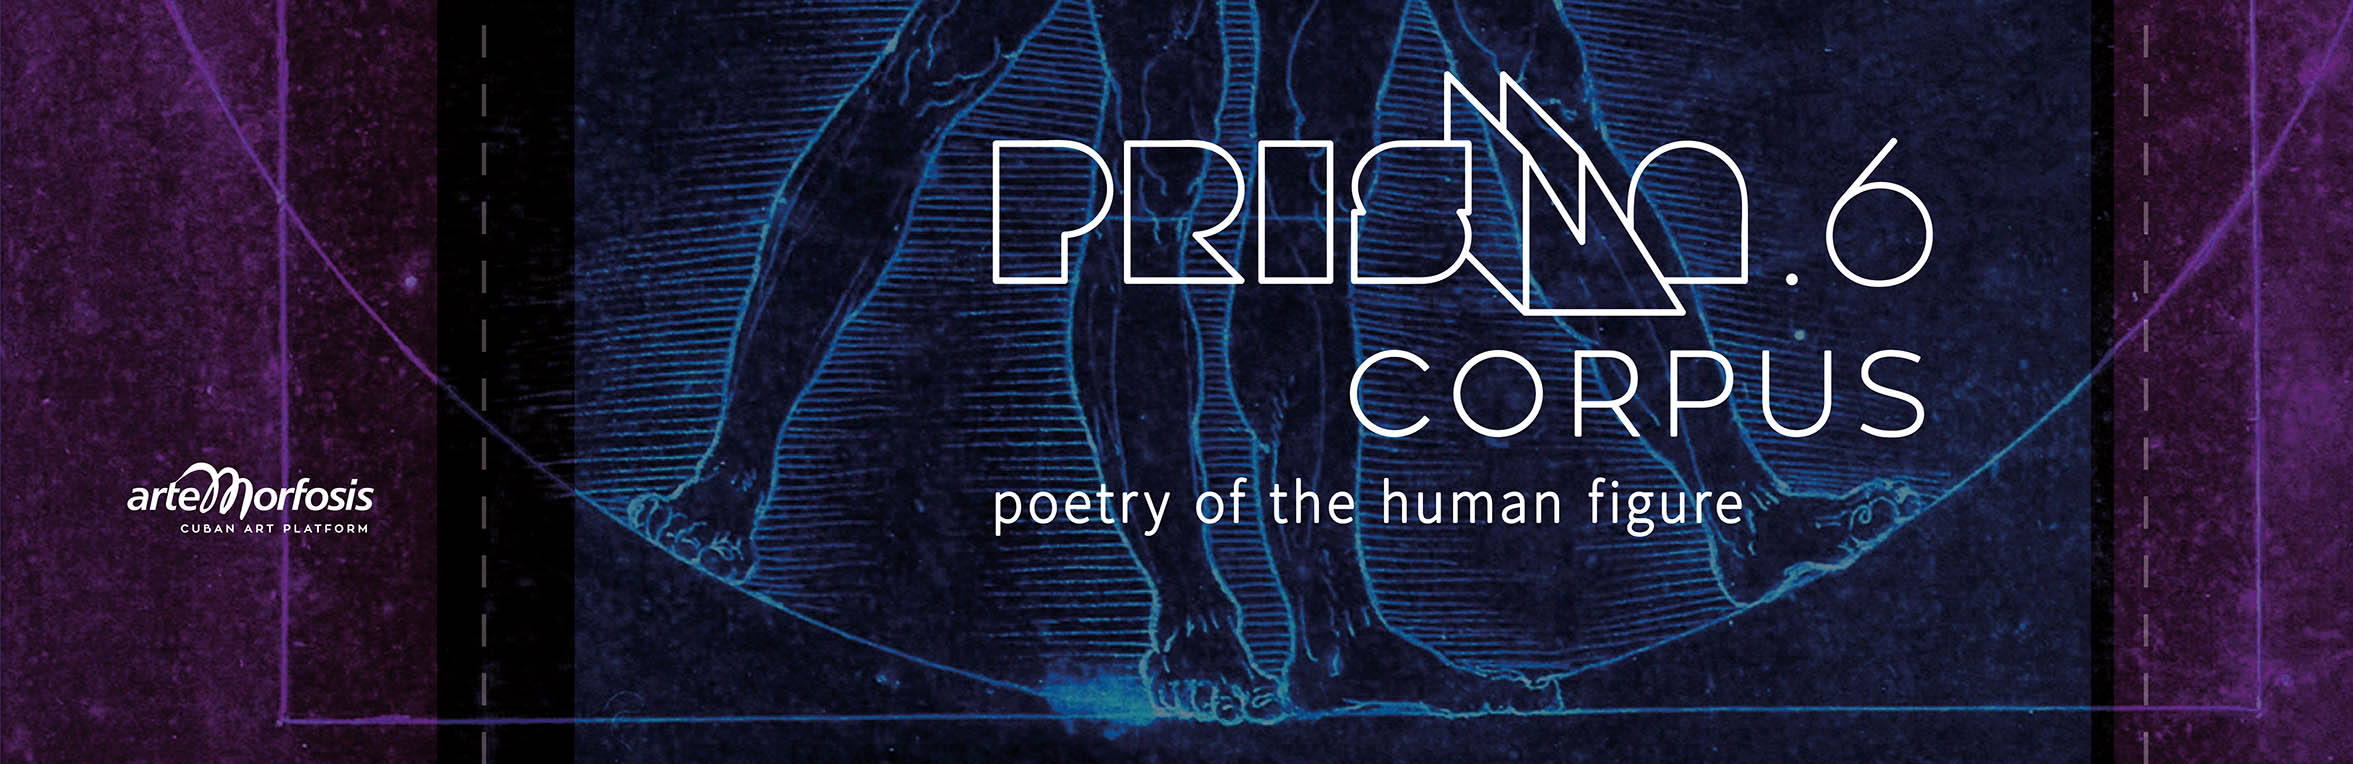 PRISMA 6 - CORPUS
Poetry of the Human Figure